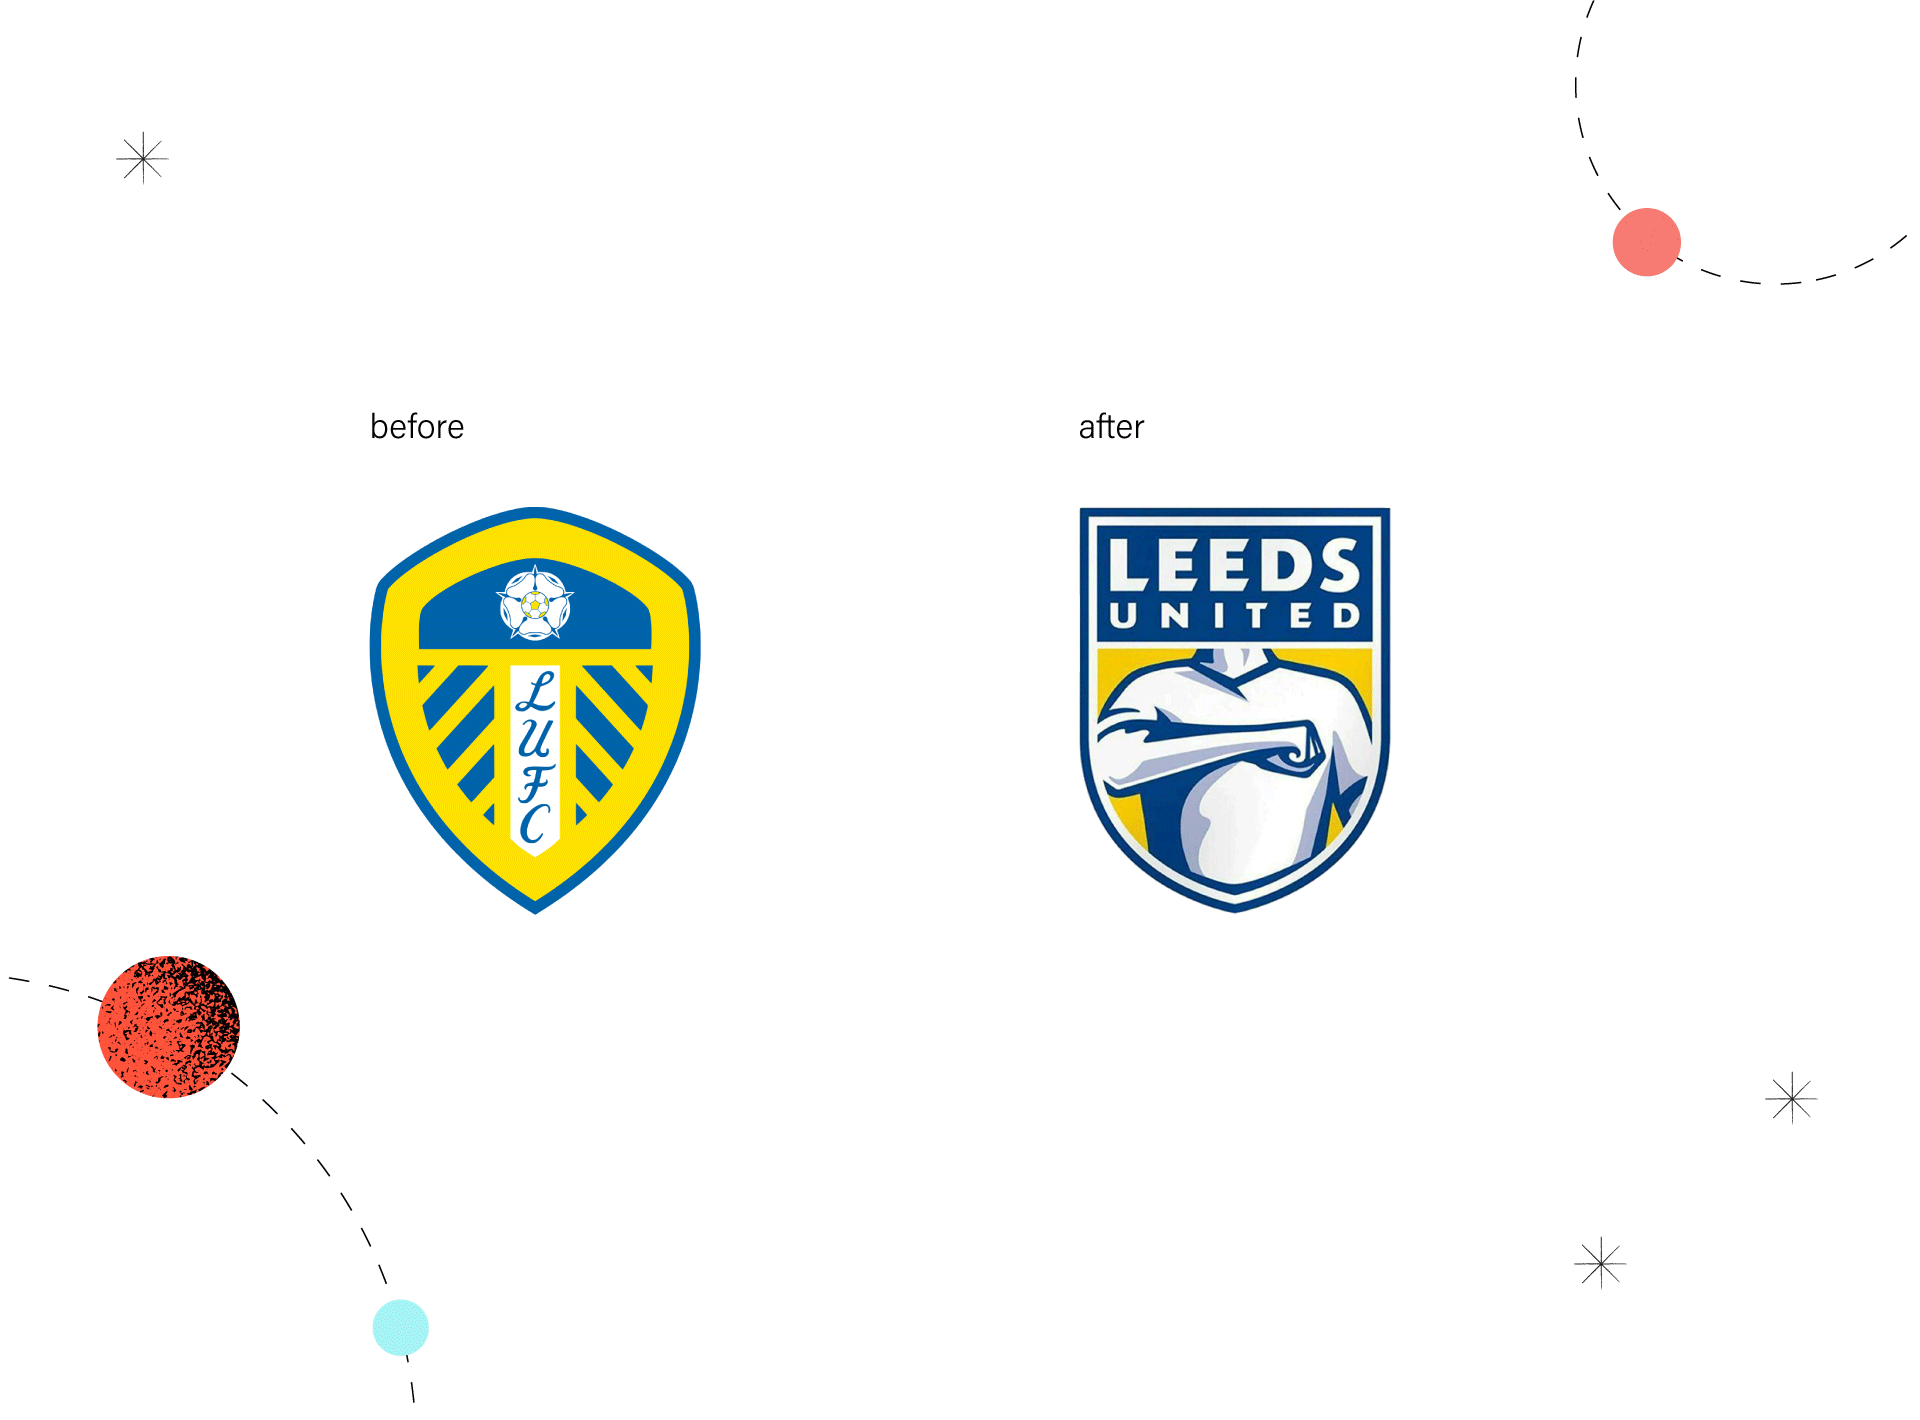 Leeds United rebranding 2018, examples of unsuccessful rebranding